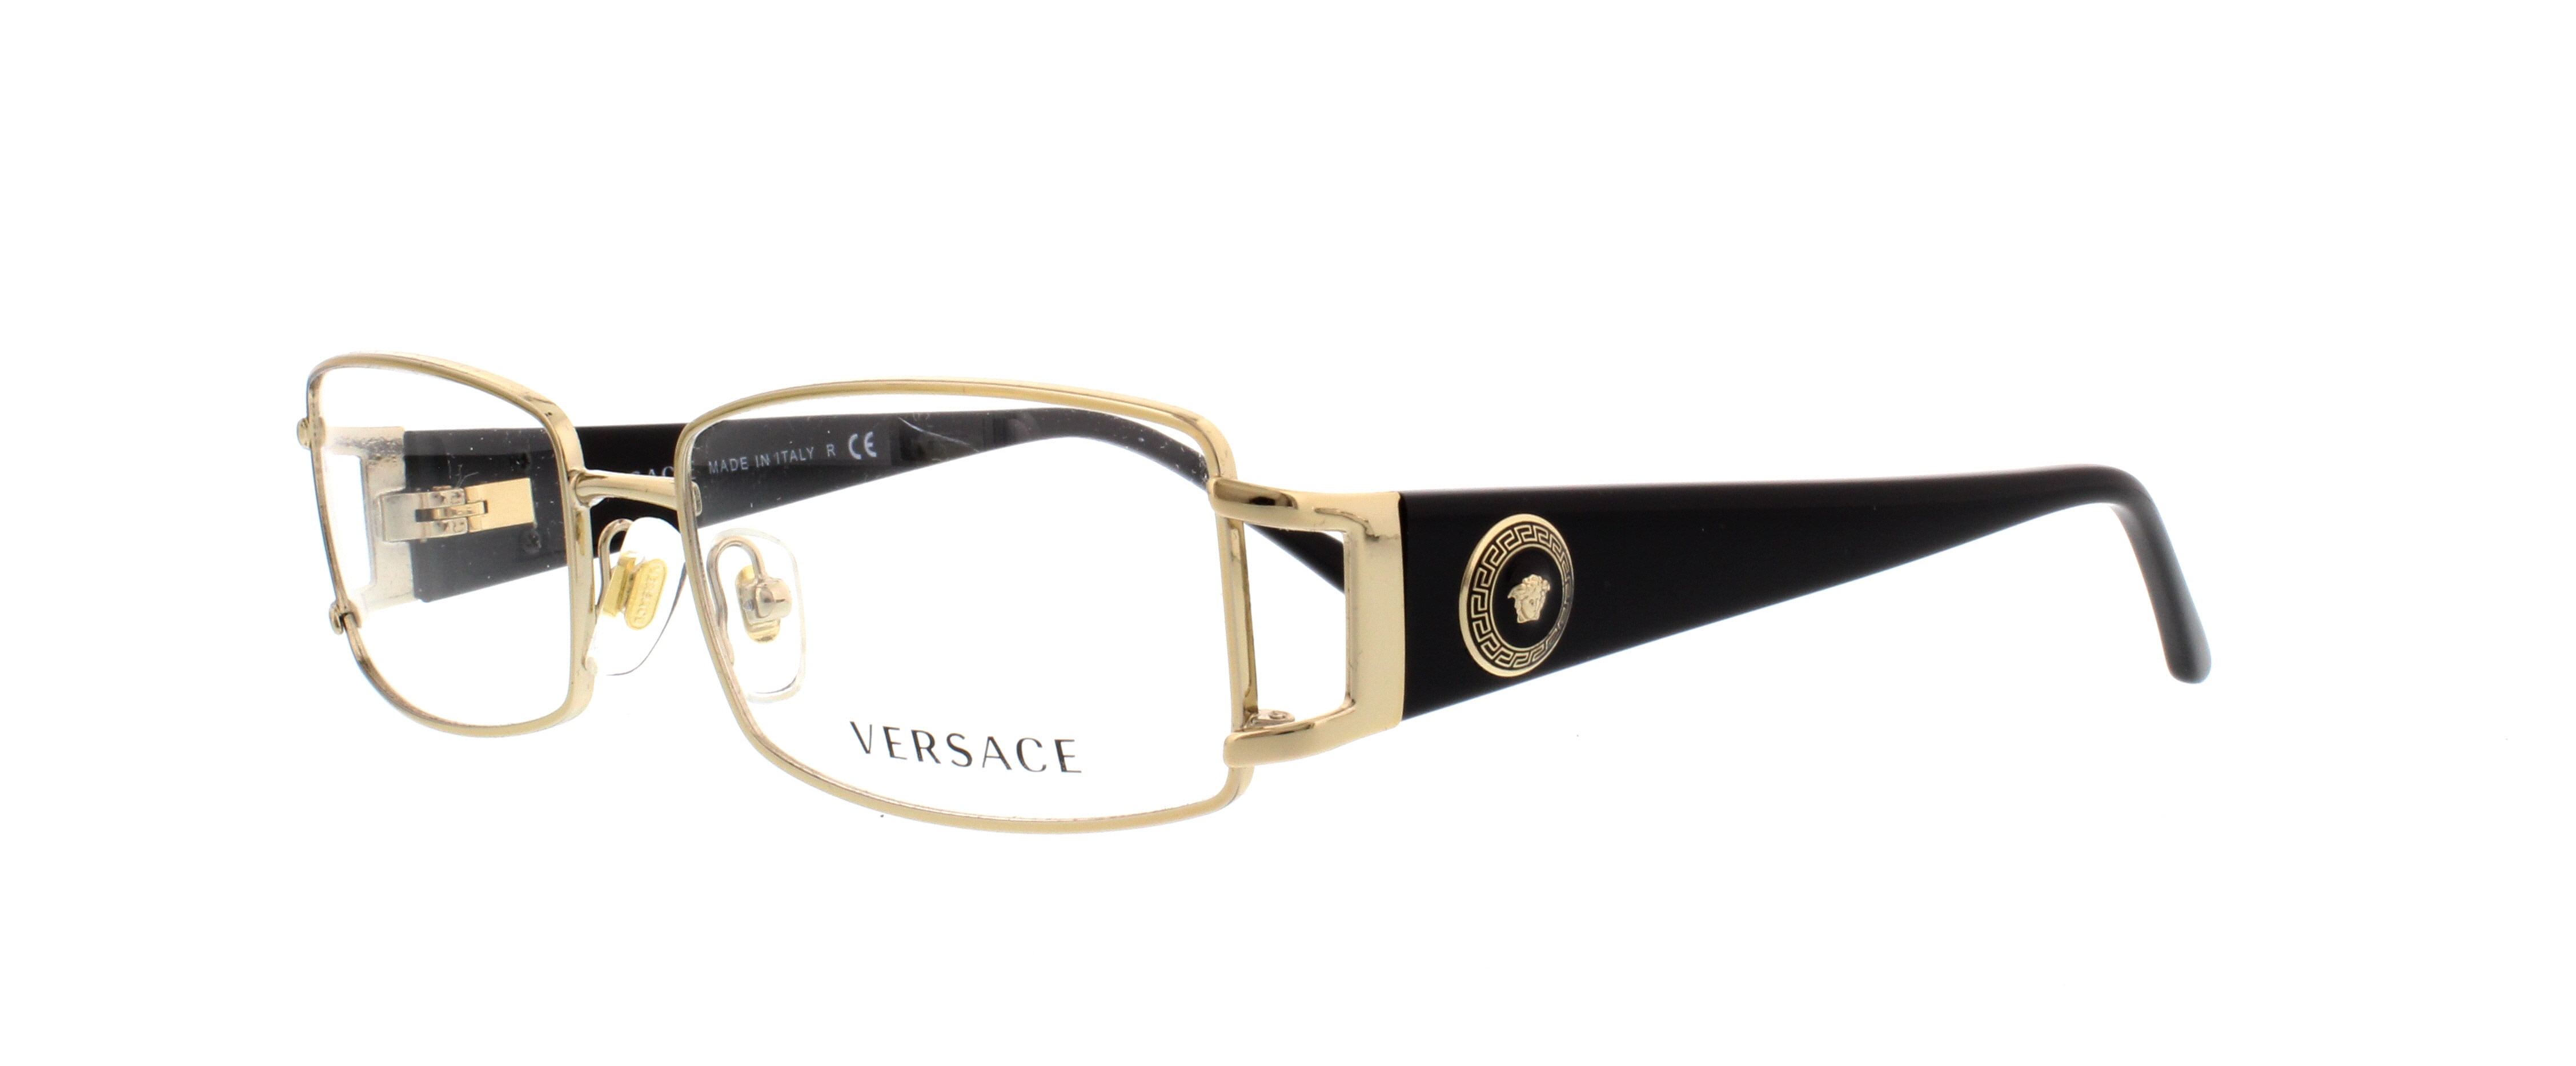 Versace VE3190 Eyeglasses-5113 Violet-52mm